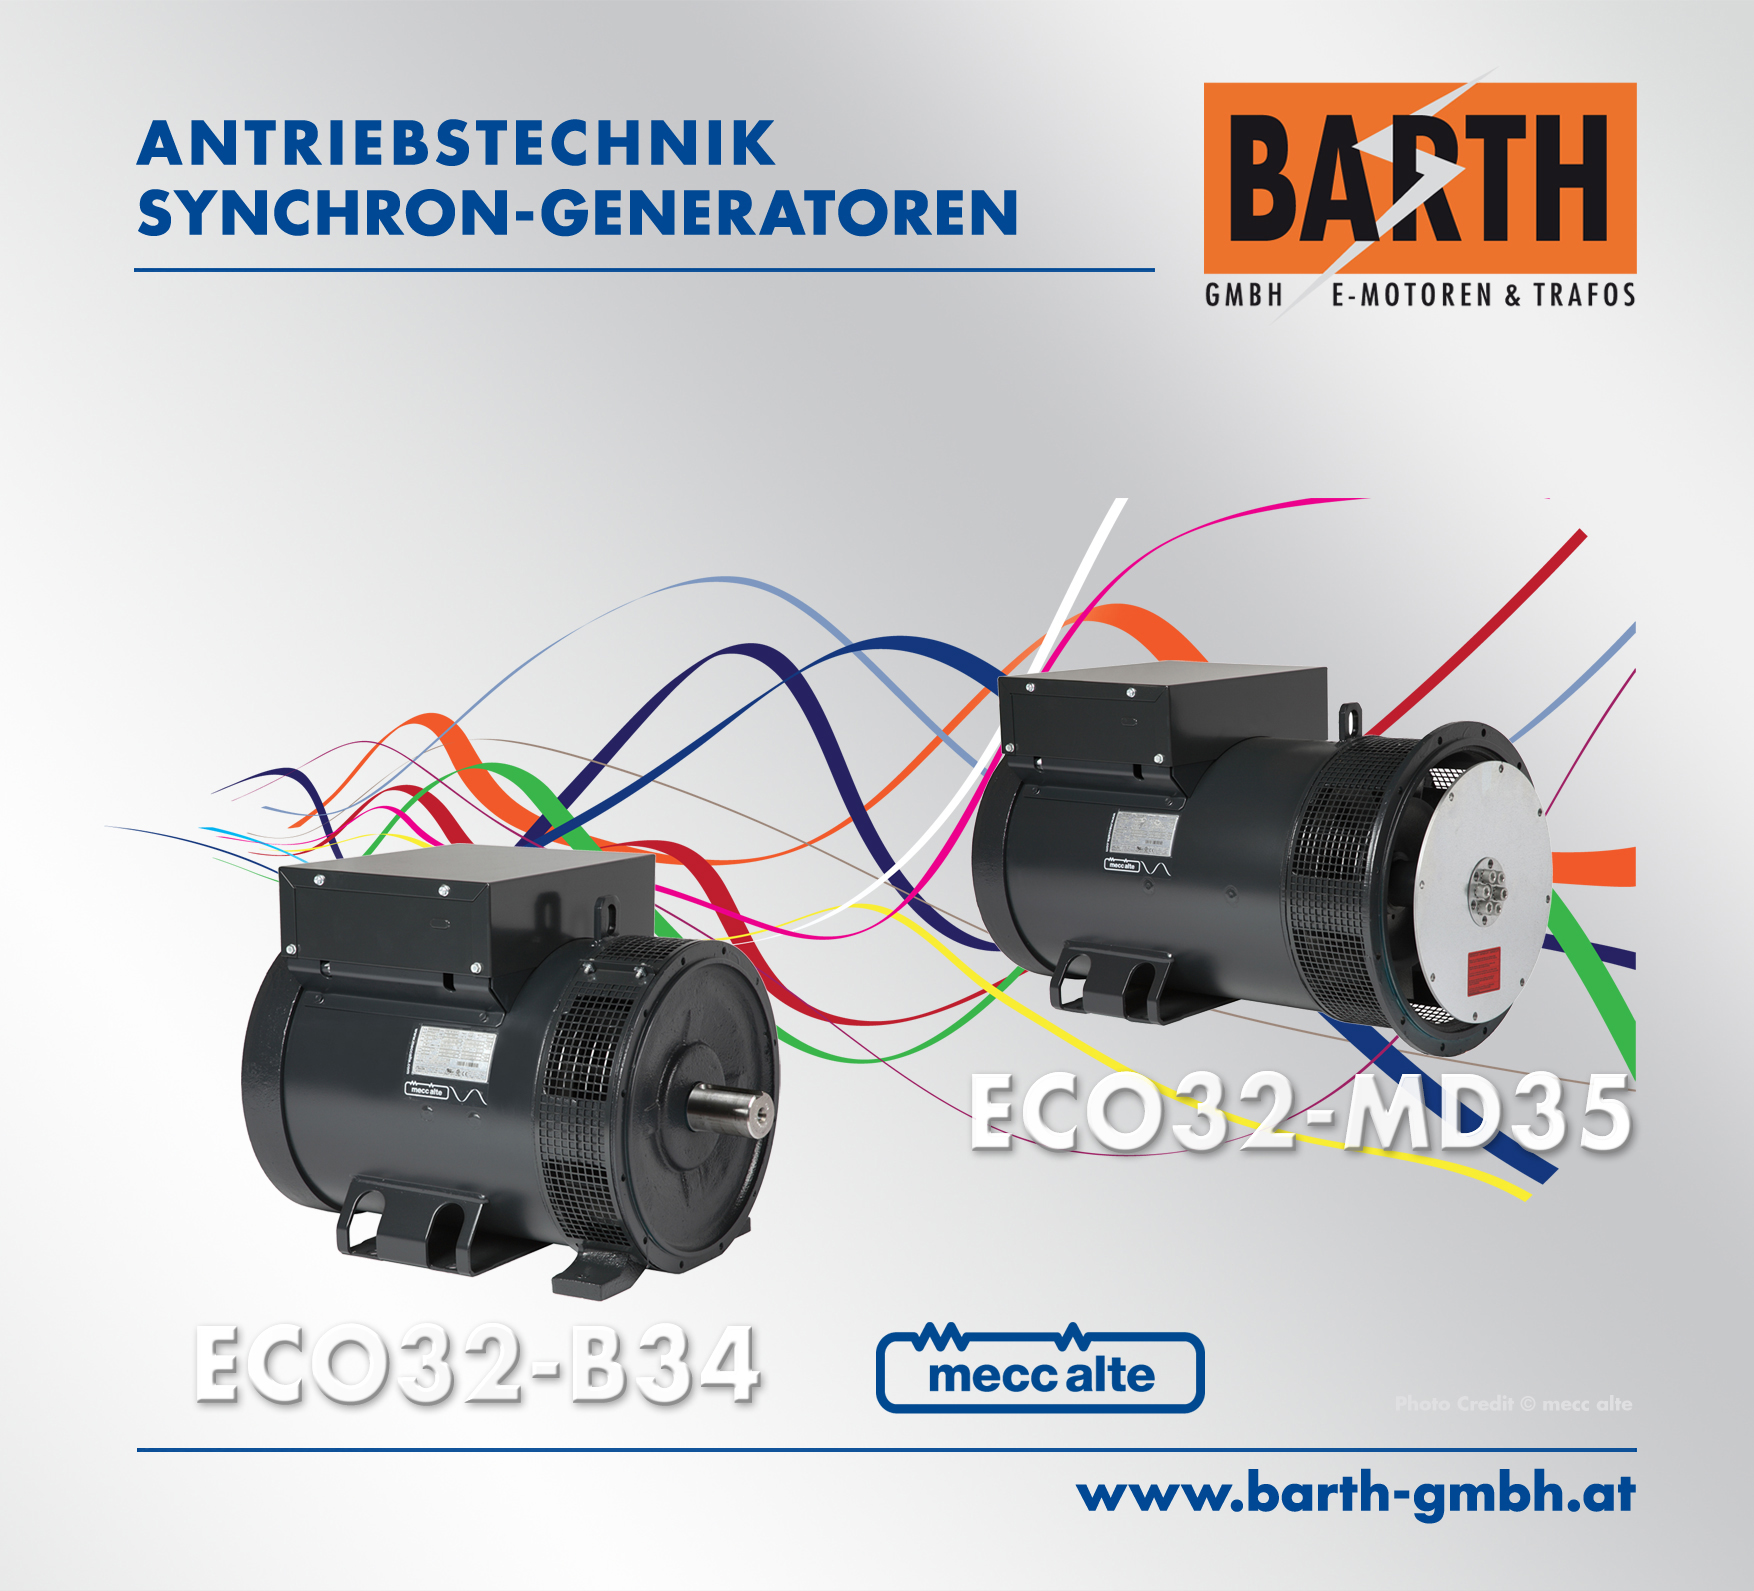 Abb.: Synchron-Generatoren ECO32